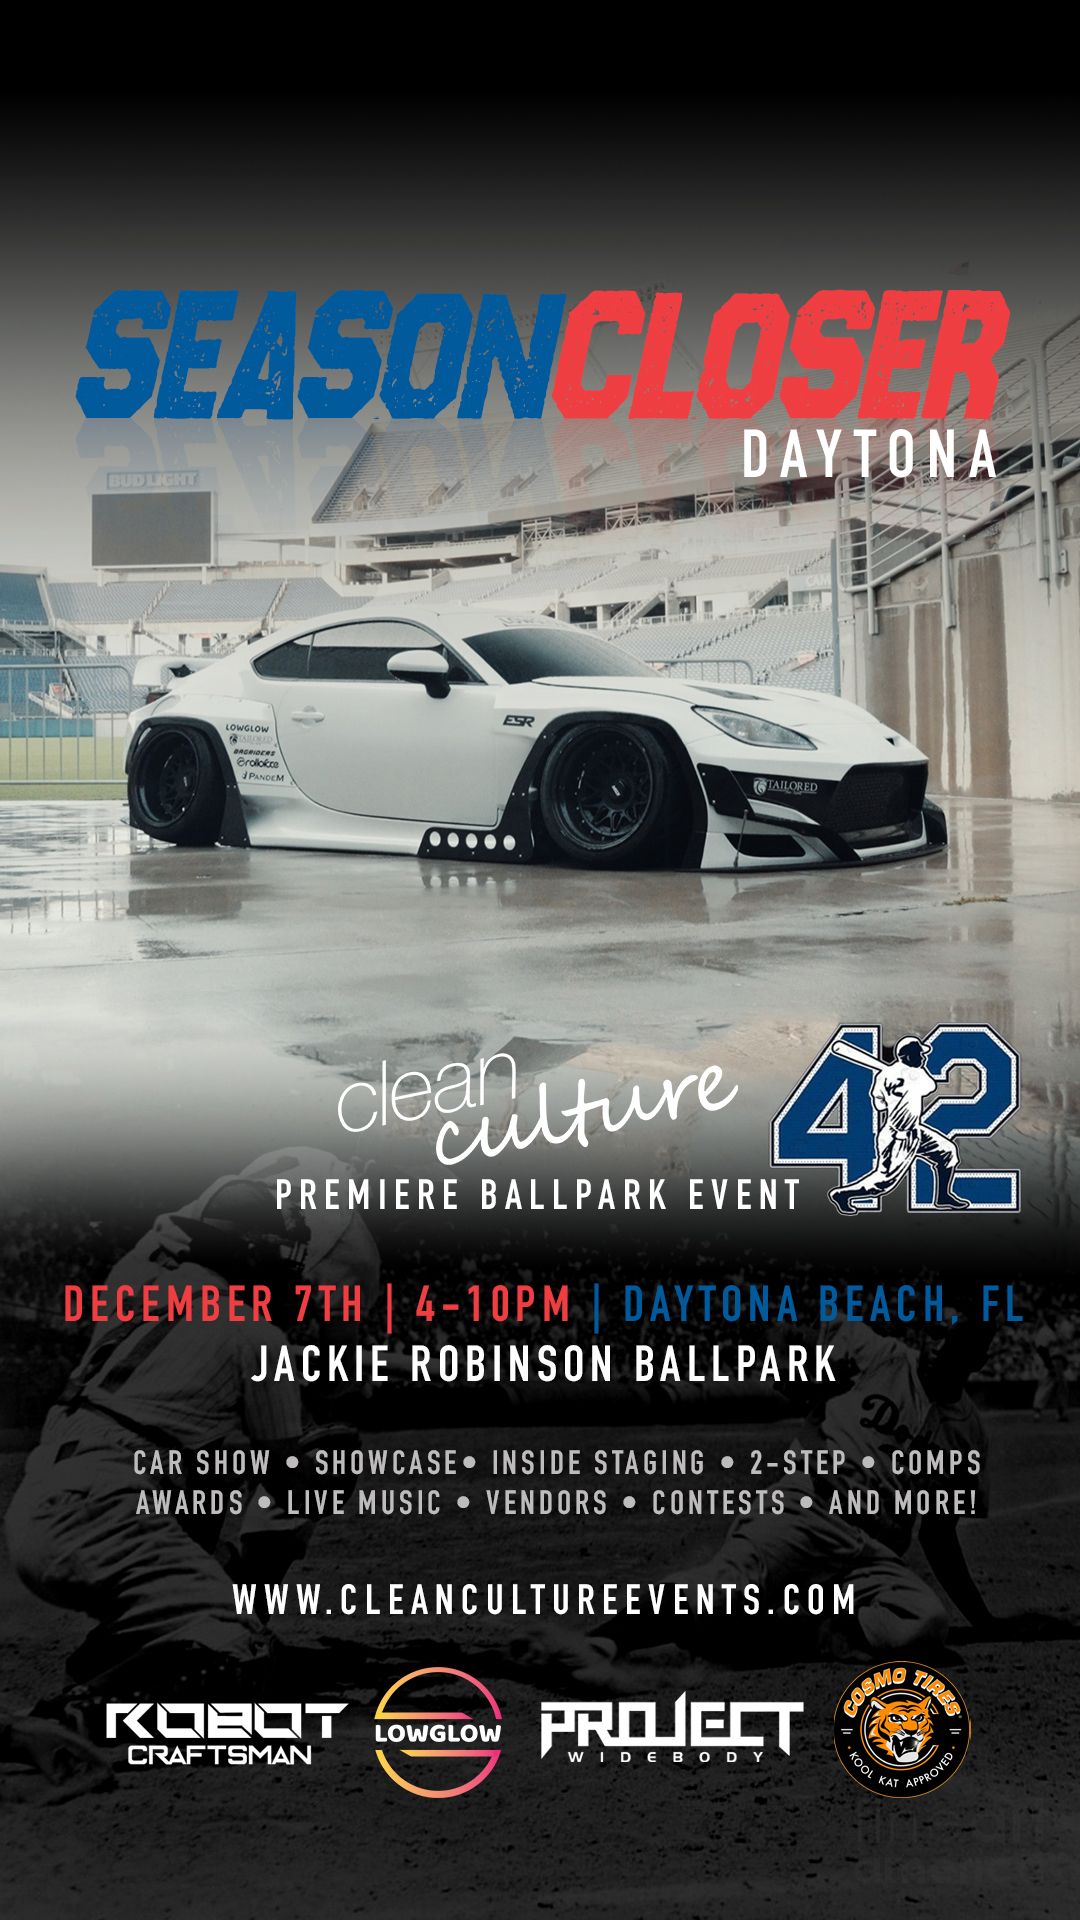 Clean Culture Daytona Season Closer